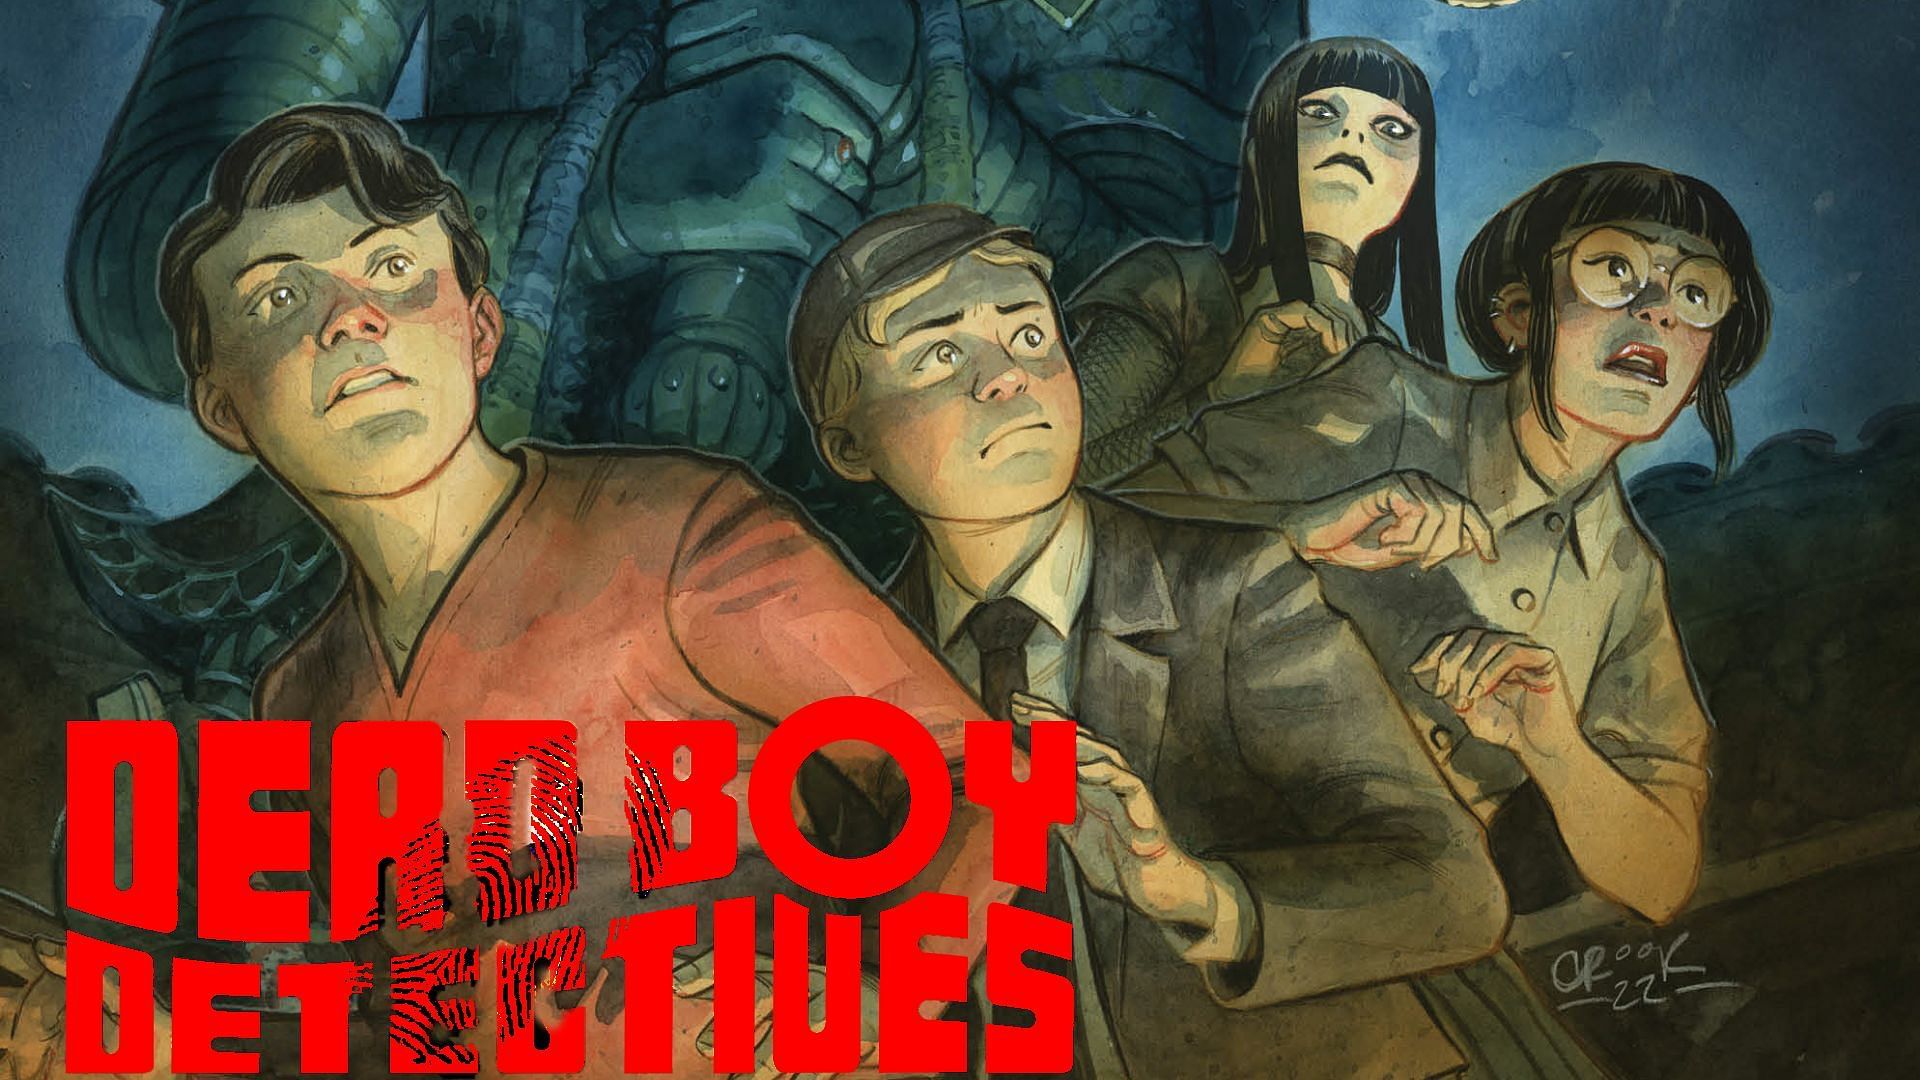 Dead Boy Detectives (Image via DC)